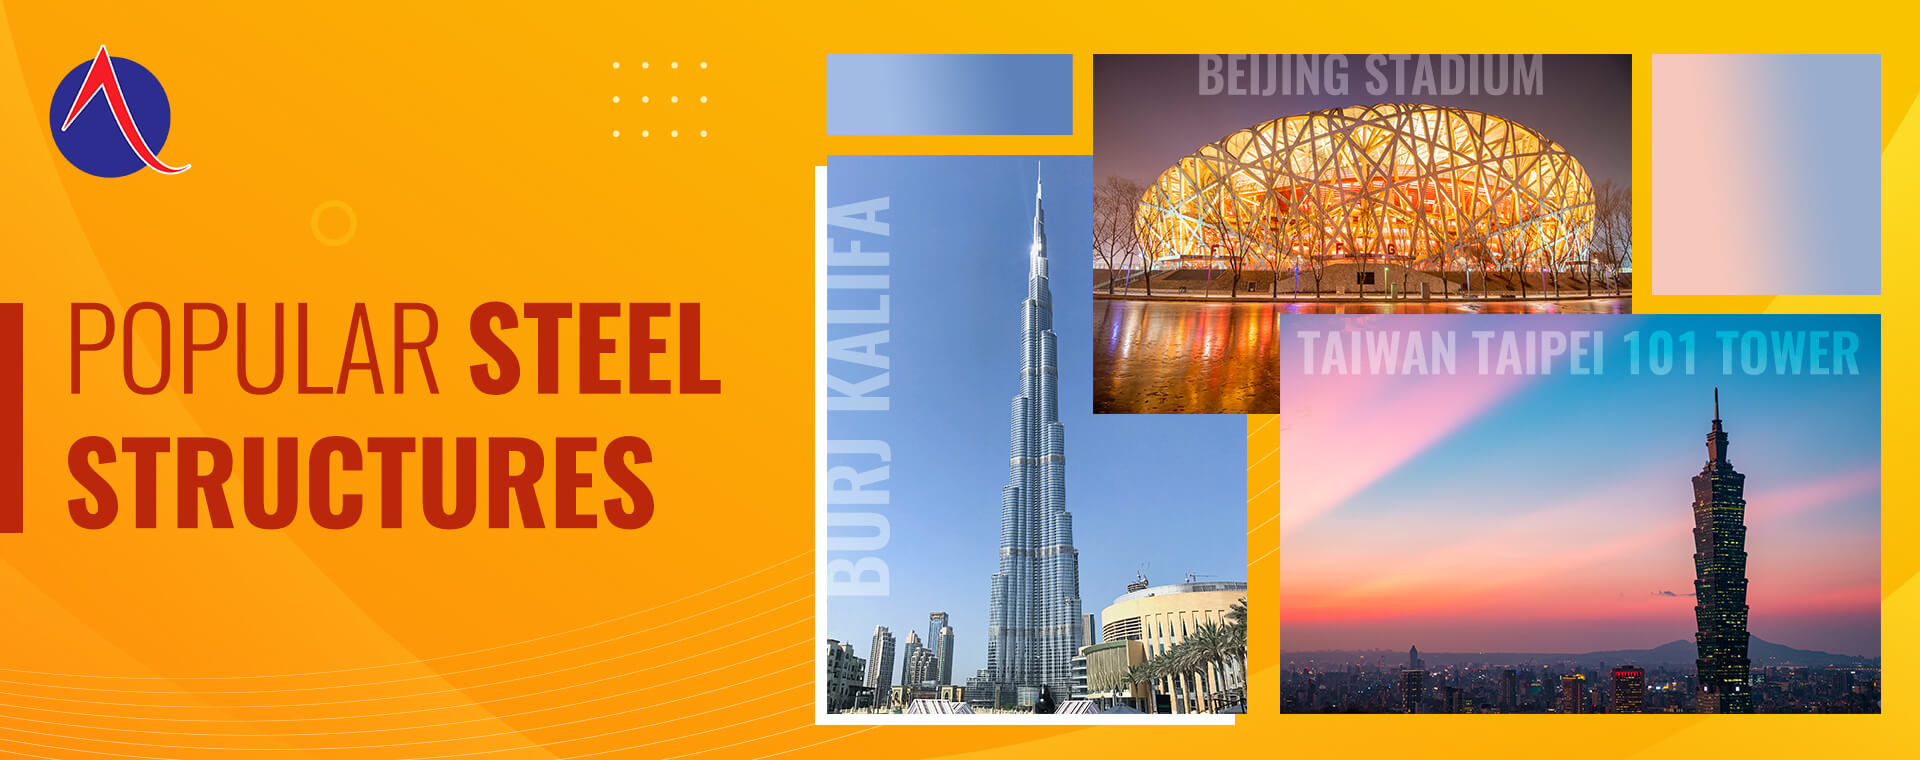 Popular Steel Buildings In The World